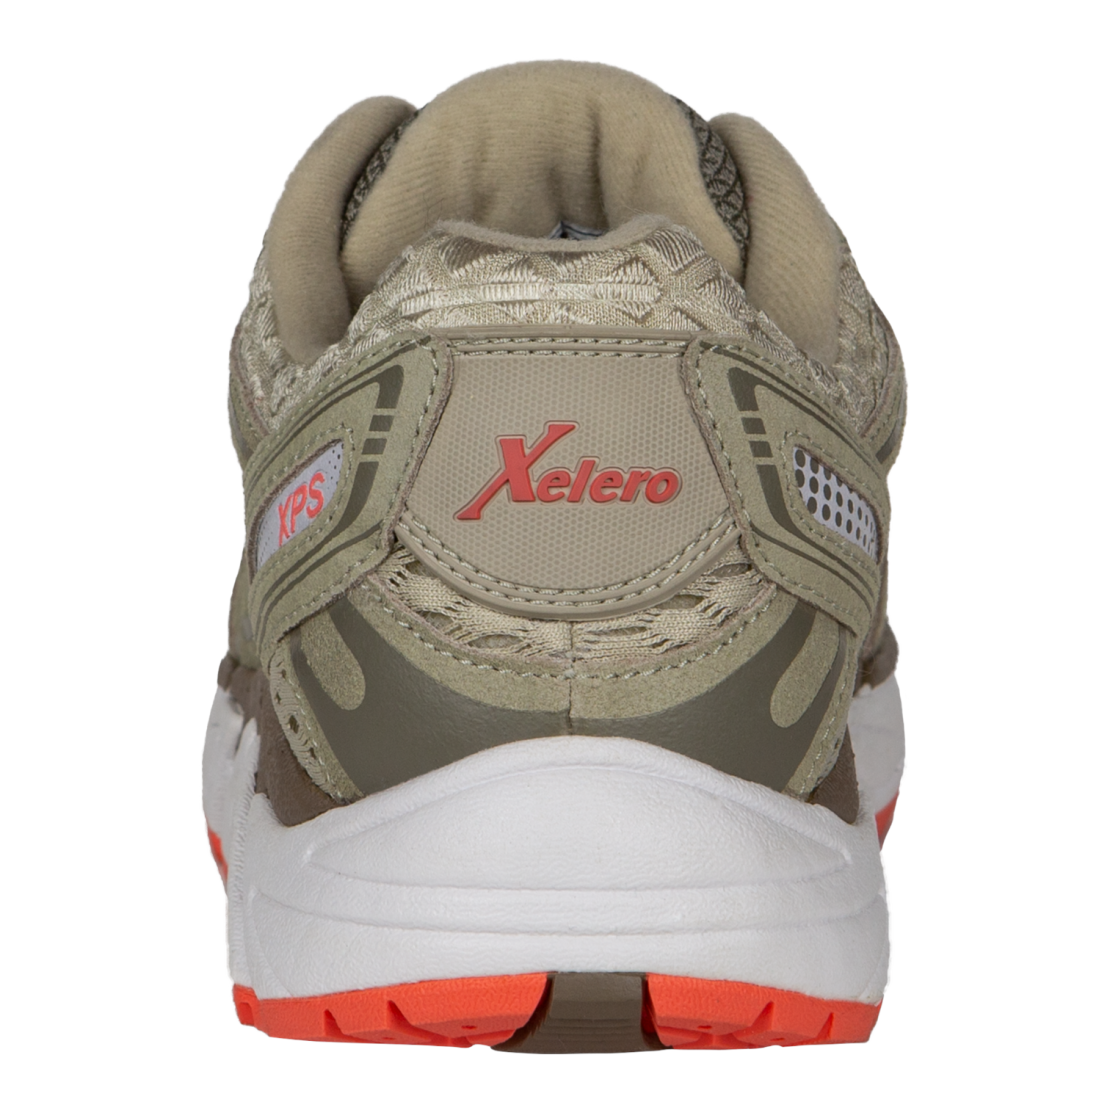 Xelero דגם ג`נסיס לנשים - Xelero Shoes Genesis XPS X62422